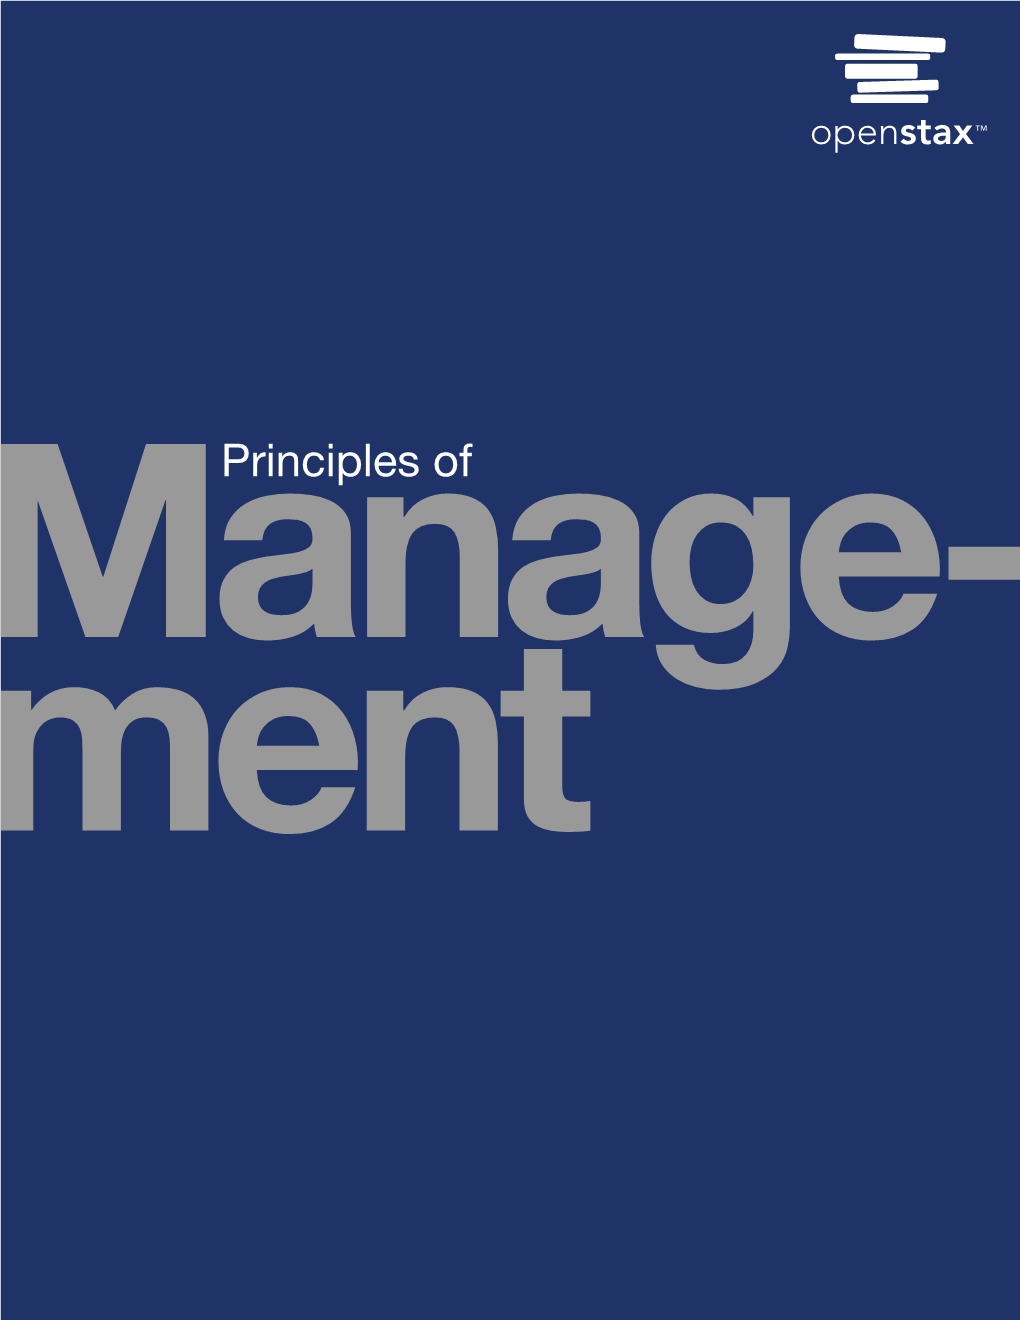 Principles of Management Openstax Rice University 6100 Main Street MS-375 Houston, Texas 77005